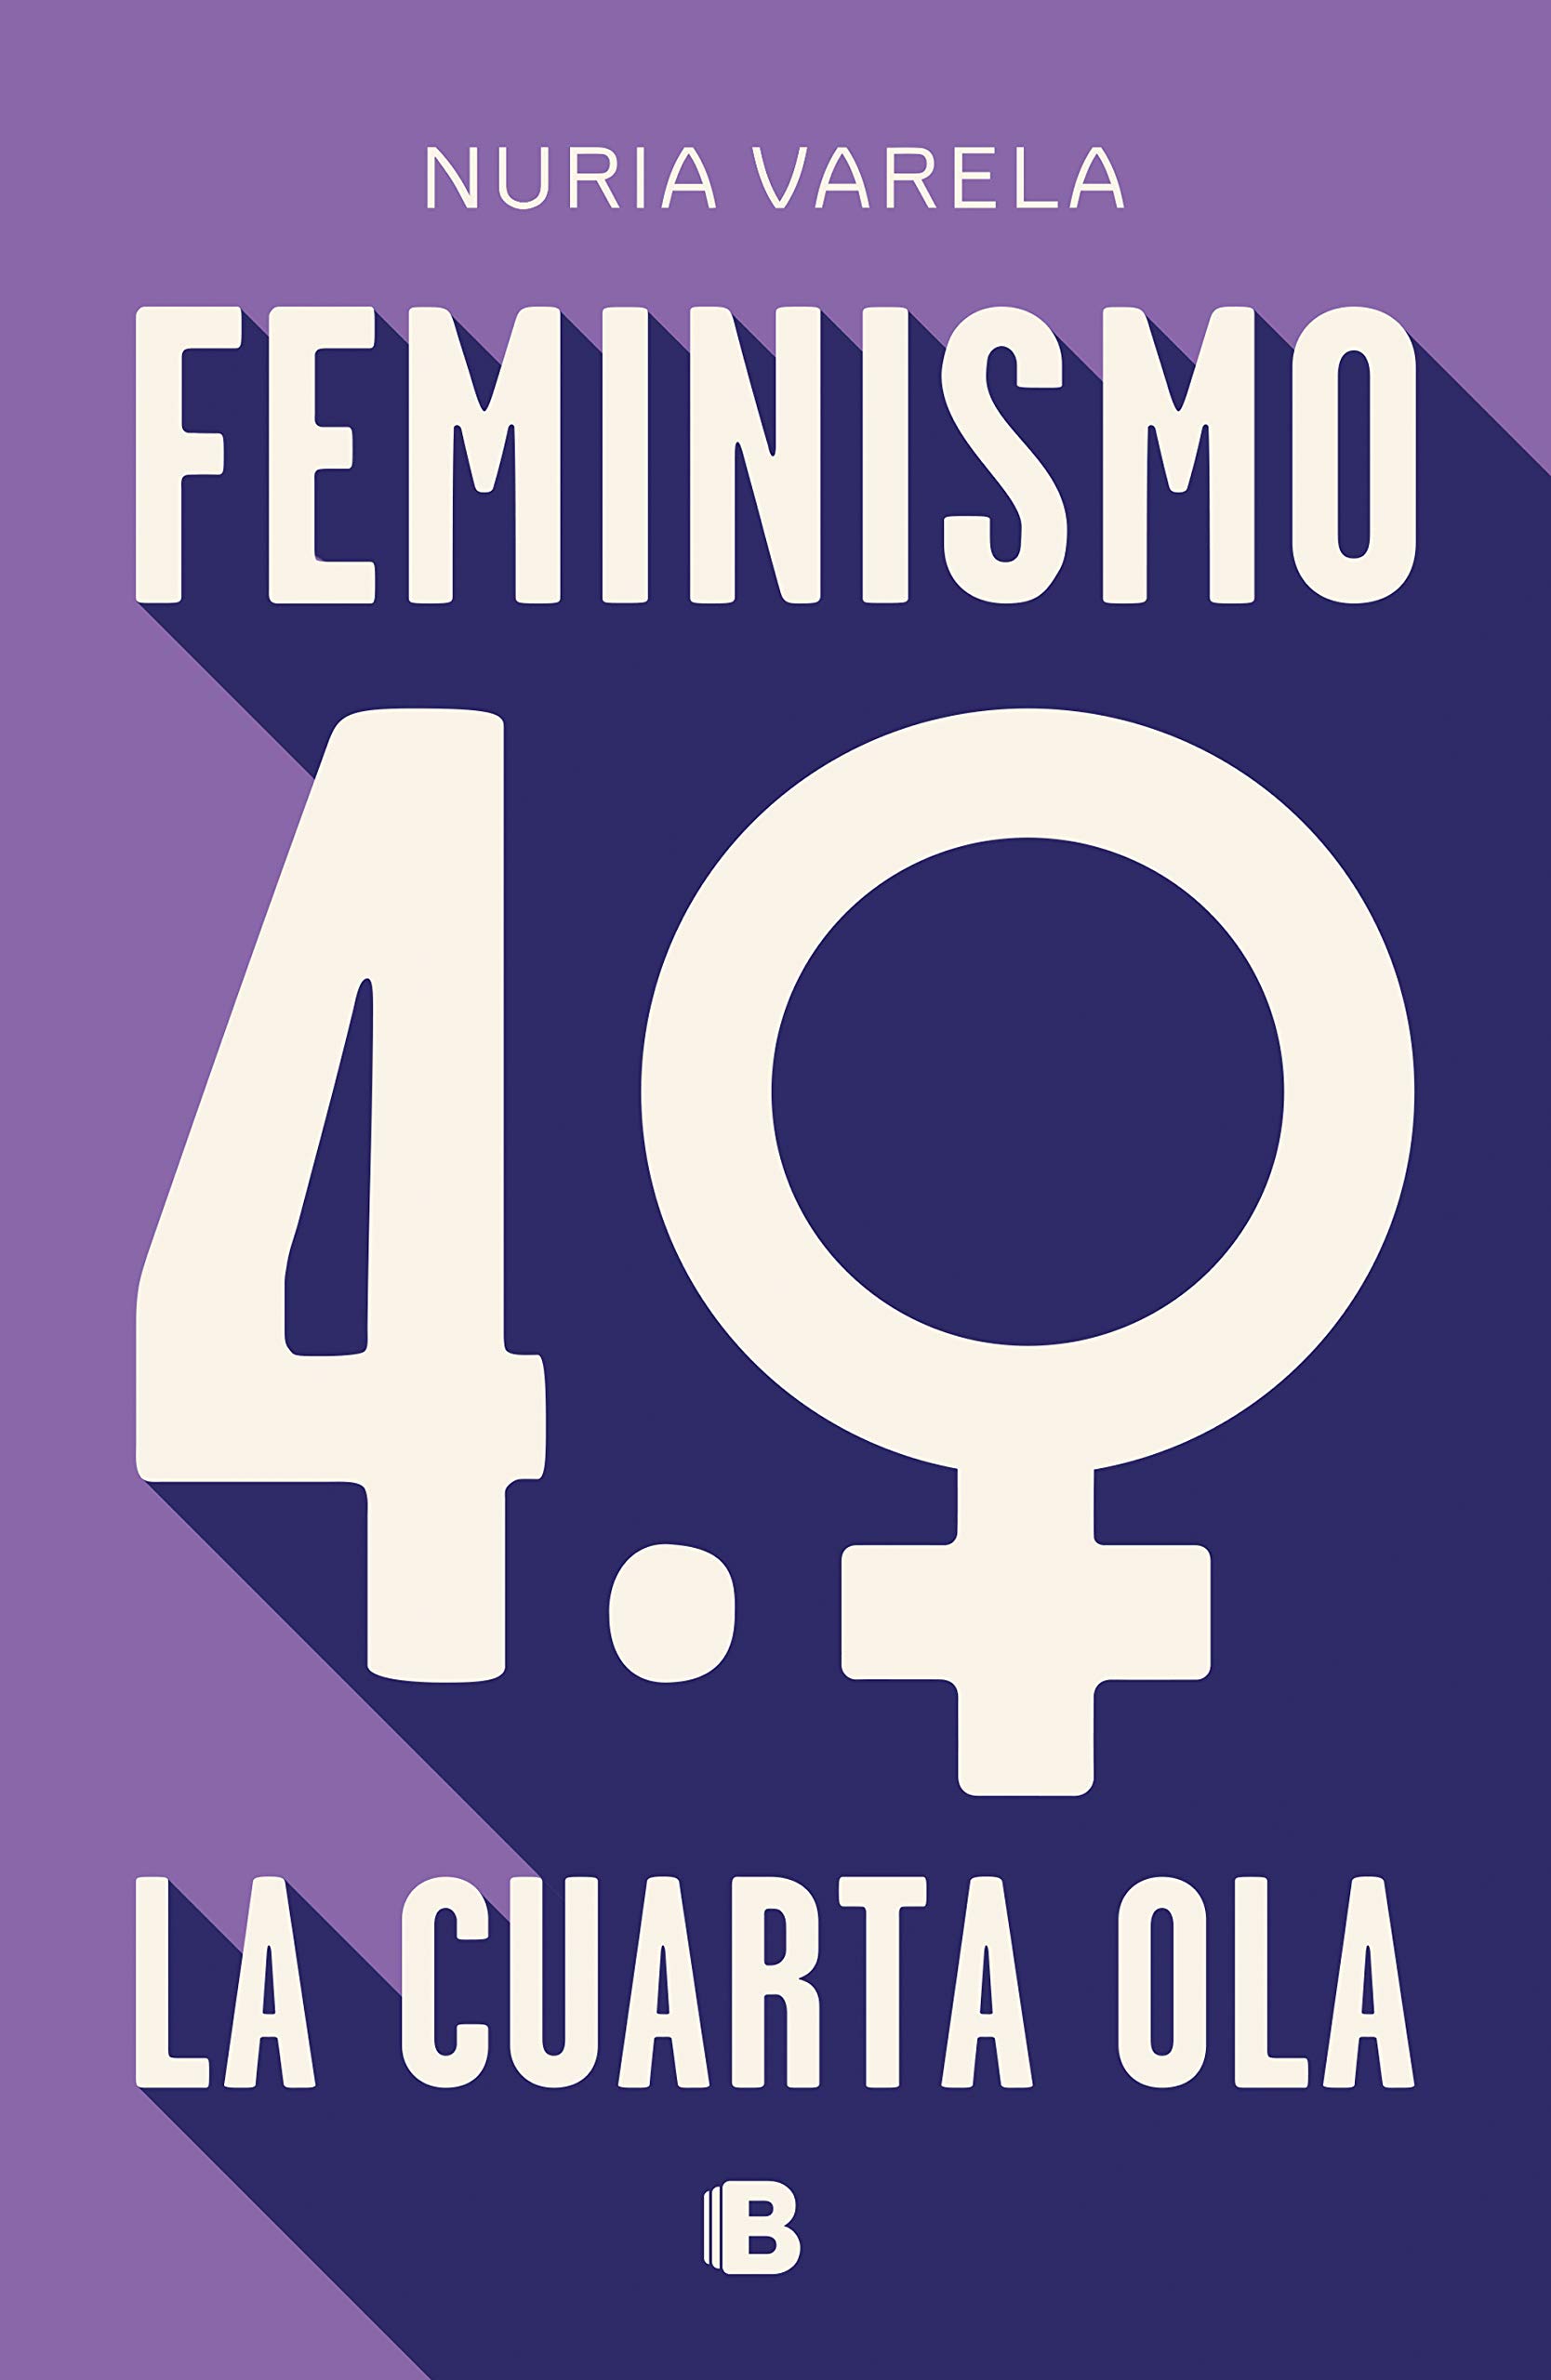 Feminismo 4.0 y Nuria Varela 🌈